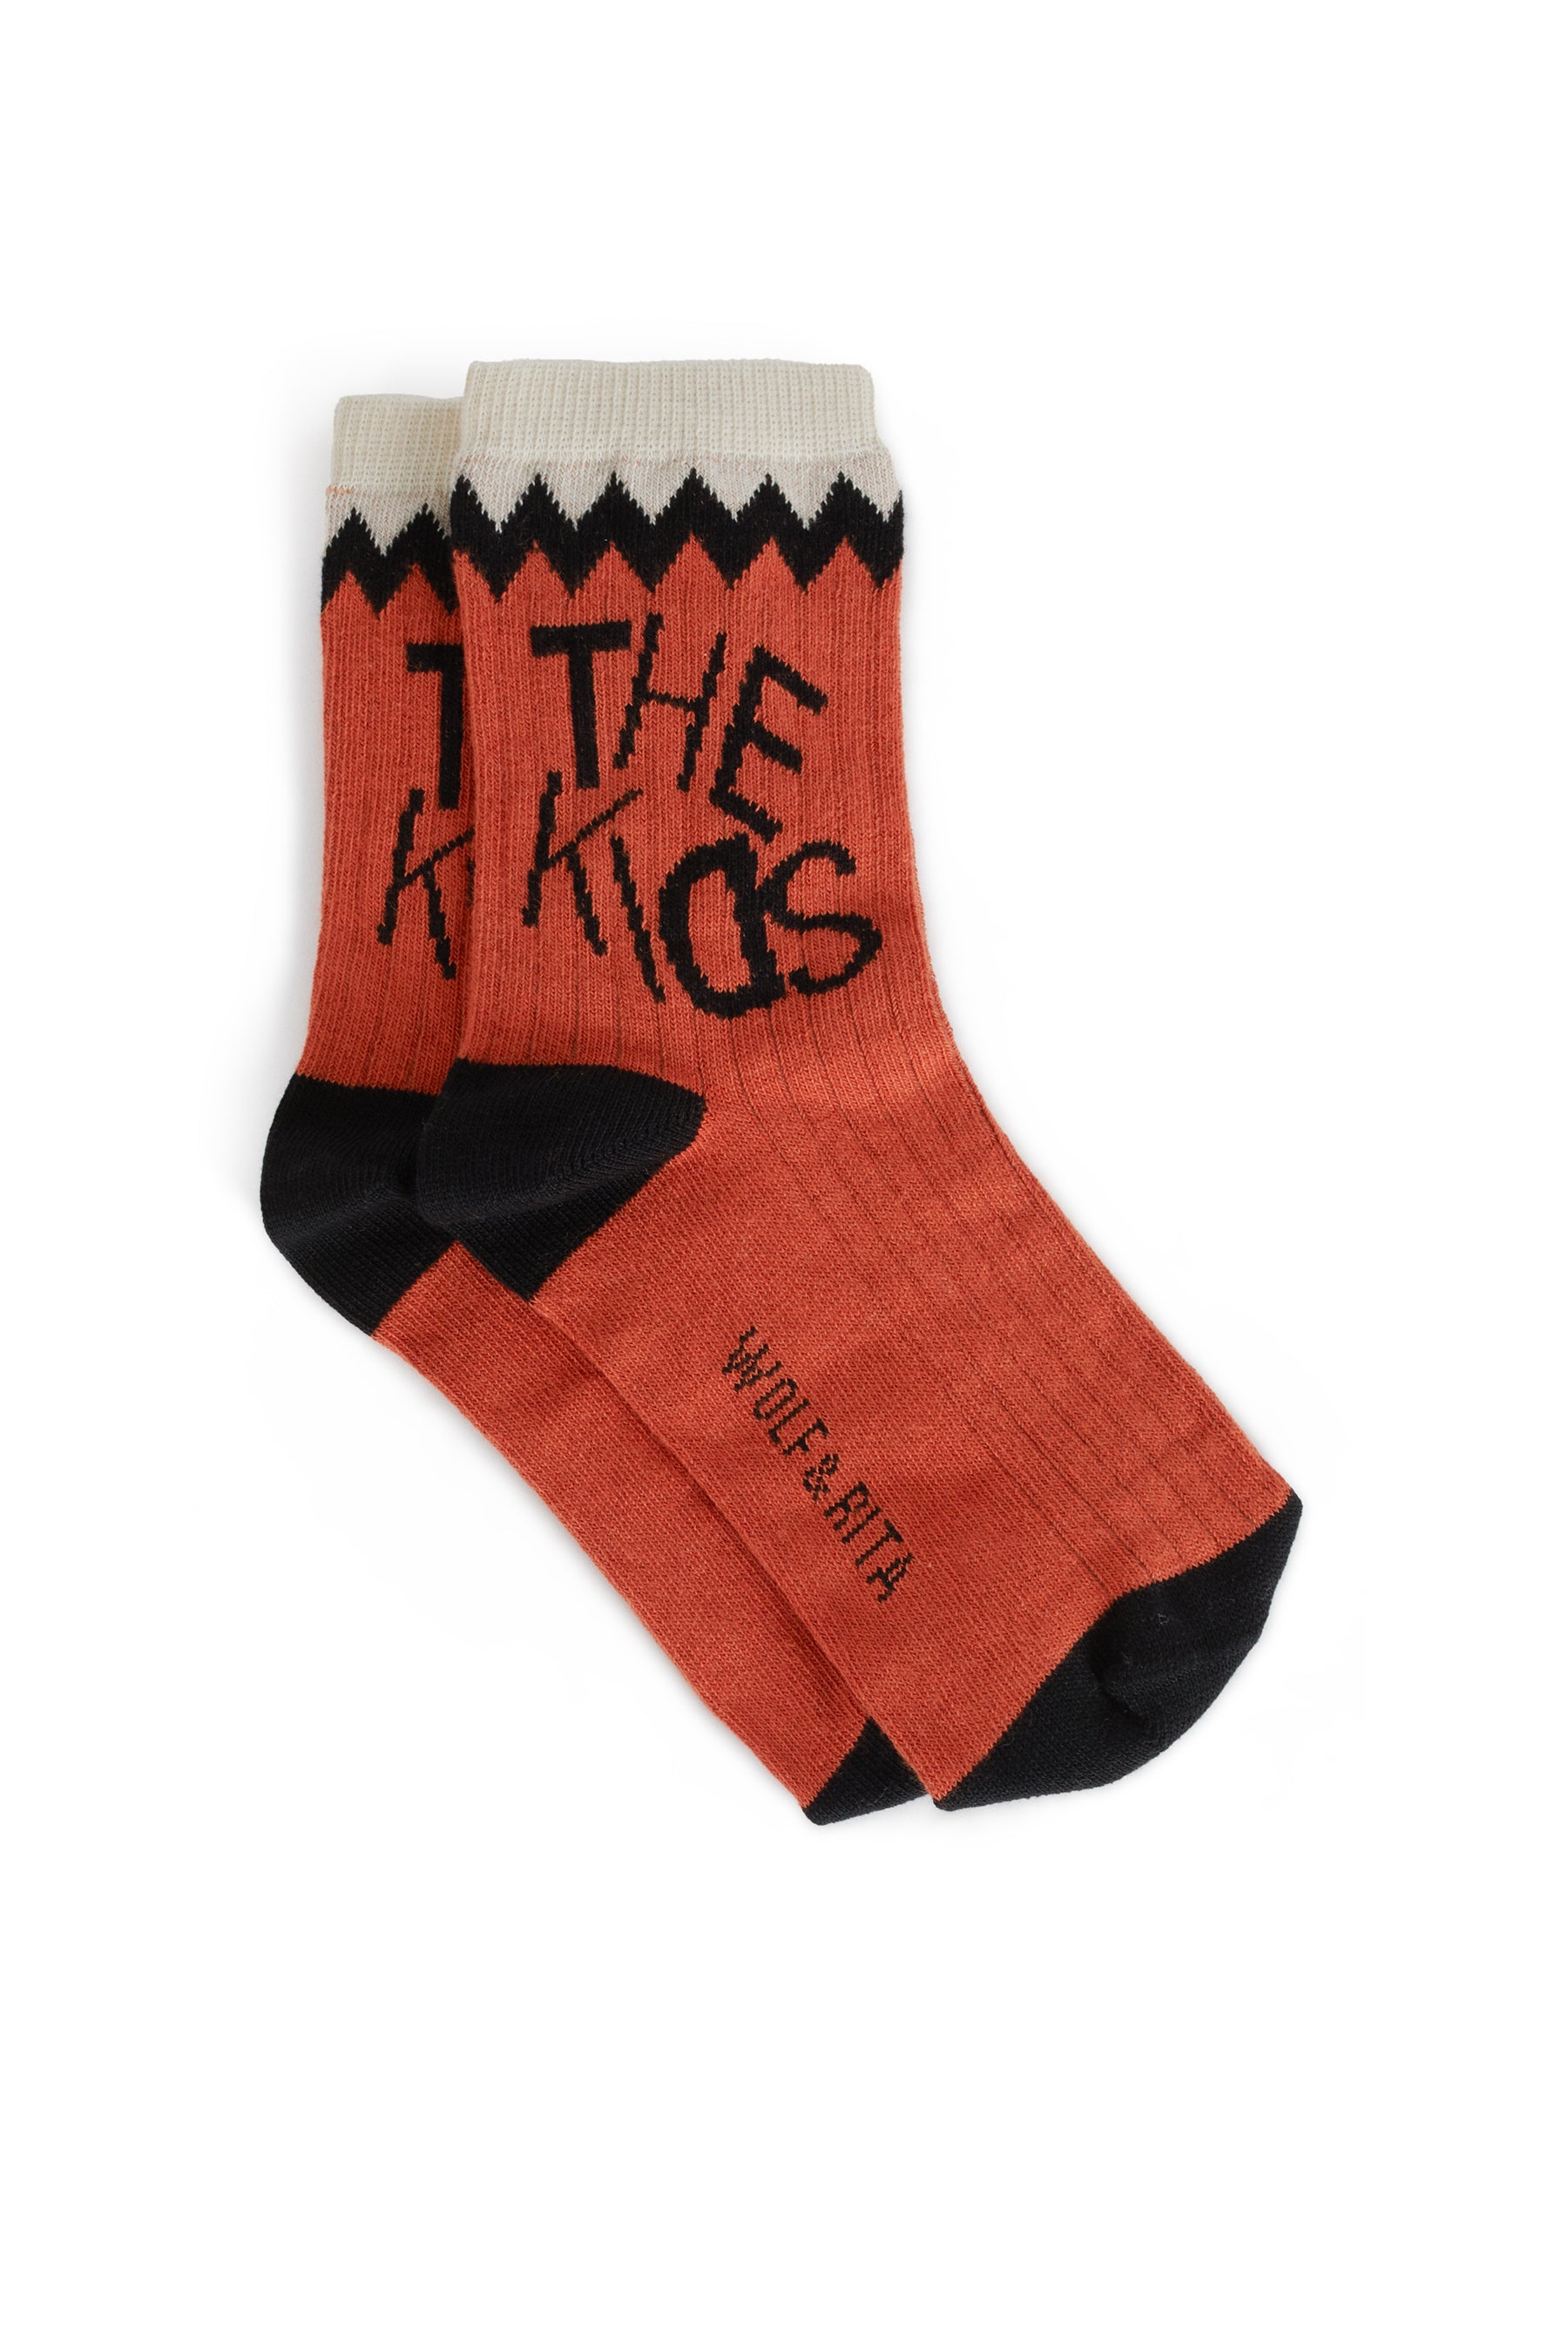 Socks The Kids Orange